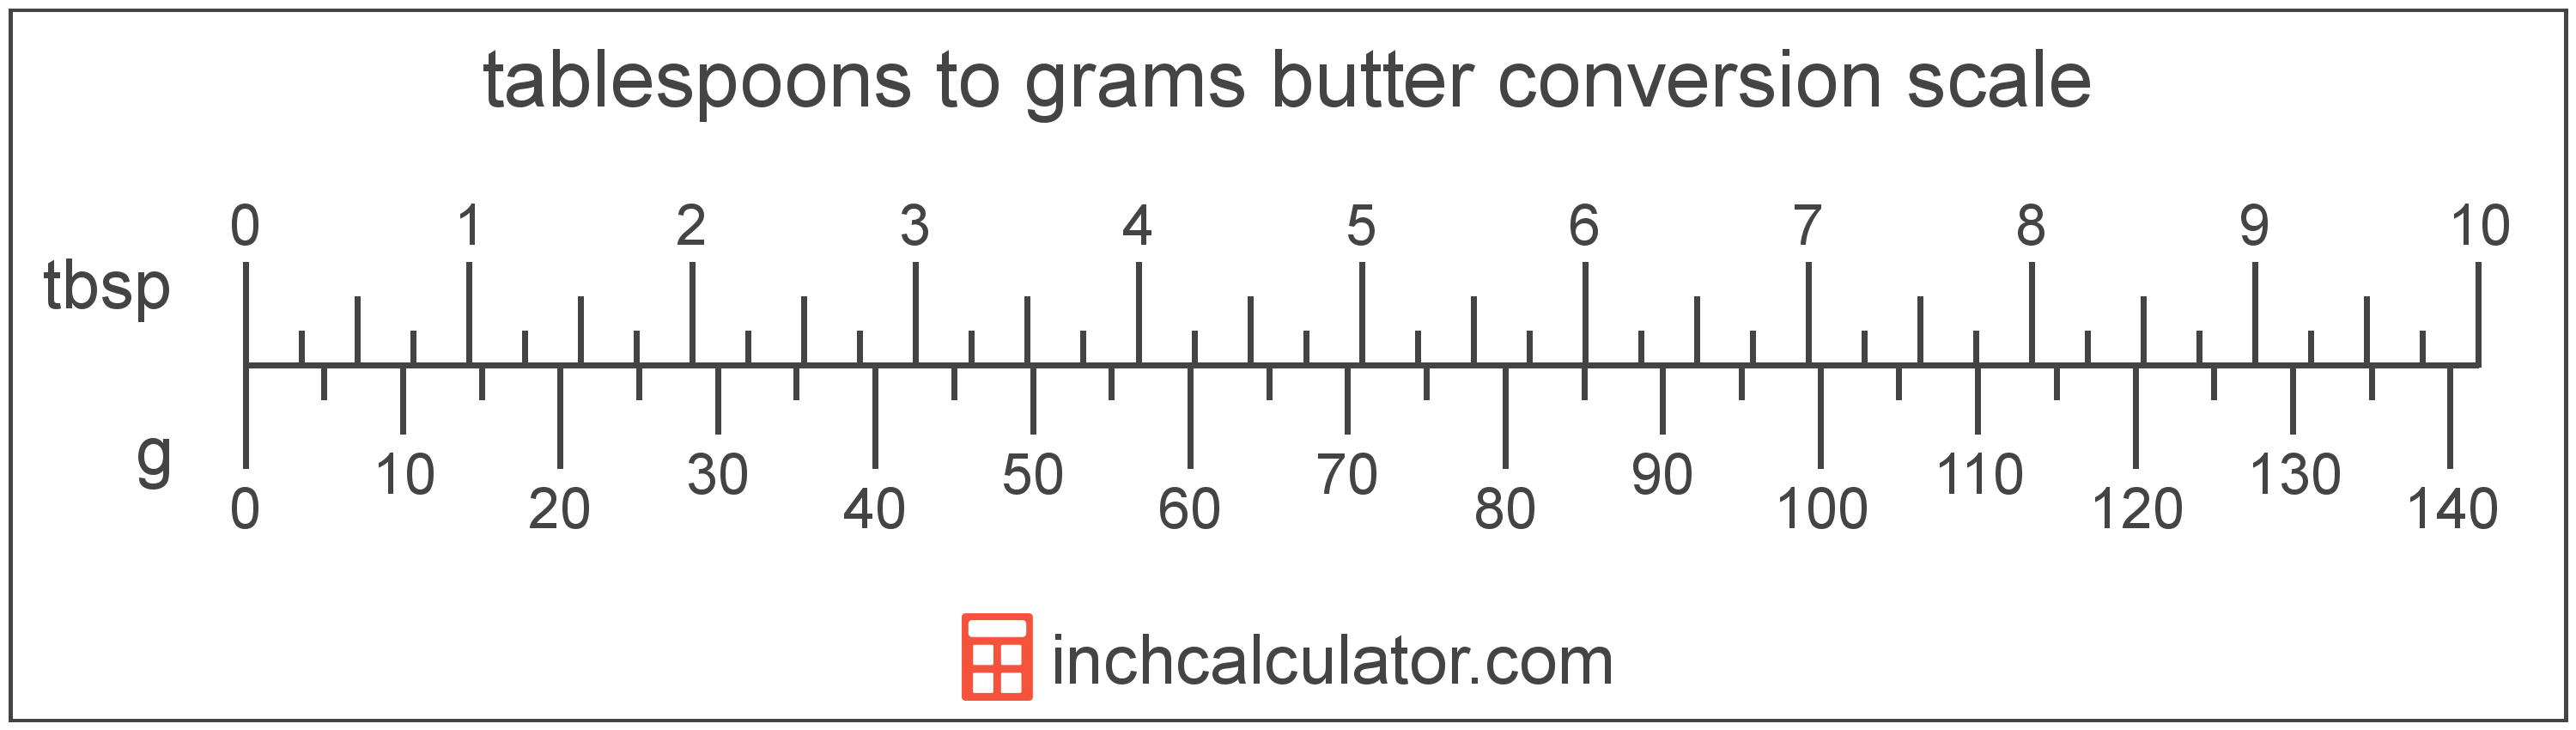 3 tbsp in grams butter